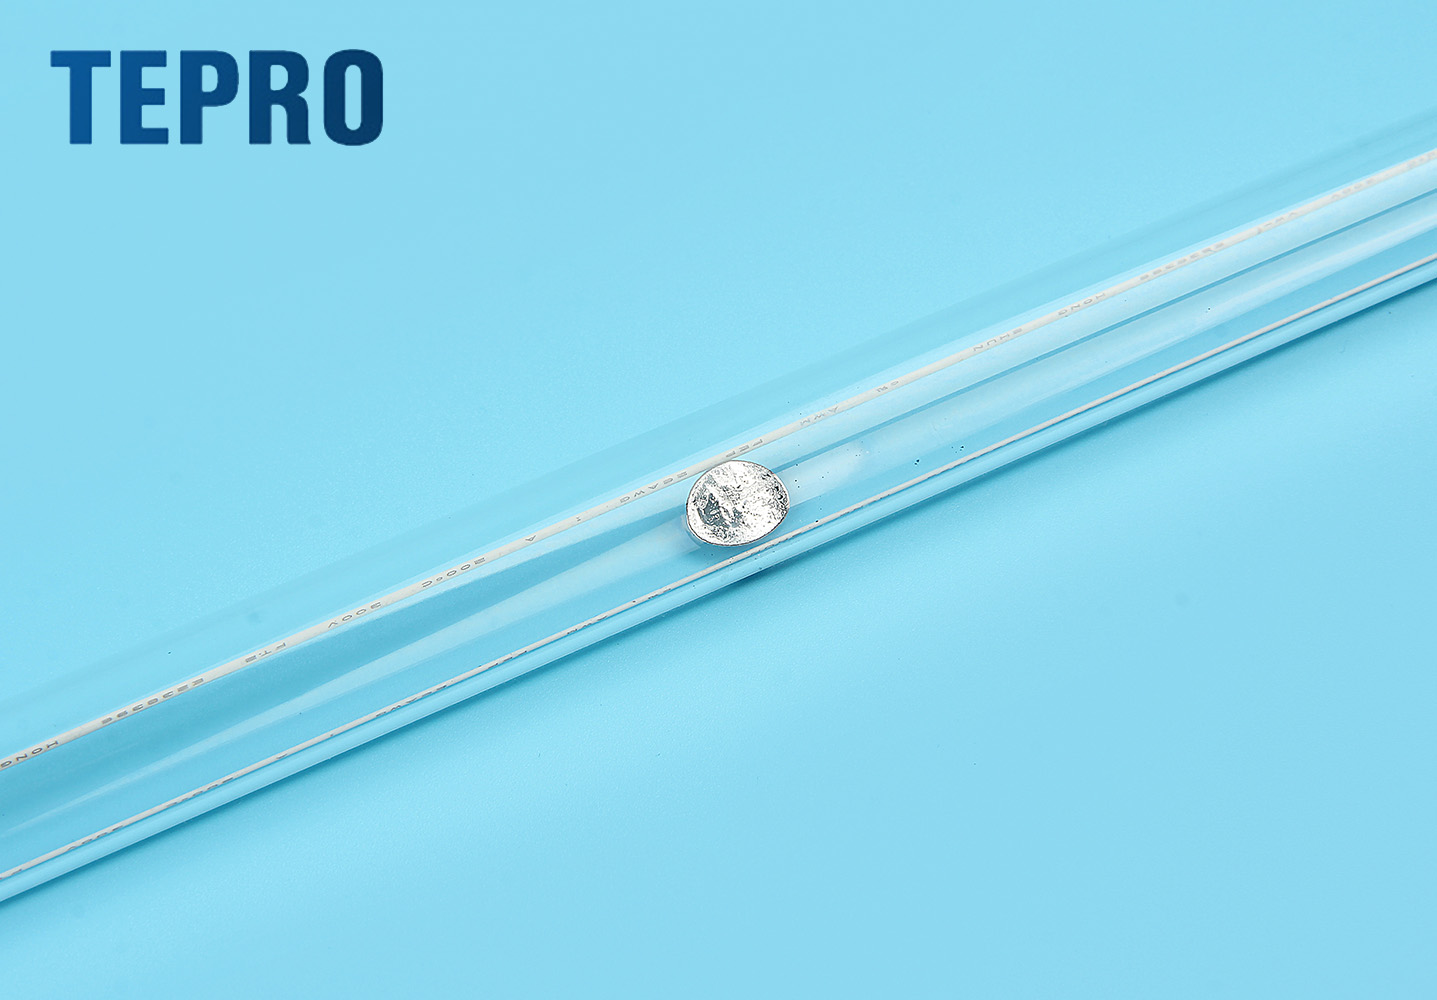 Tepro-Oem Uvc Light Manufacturer | Products